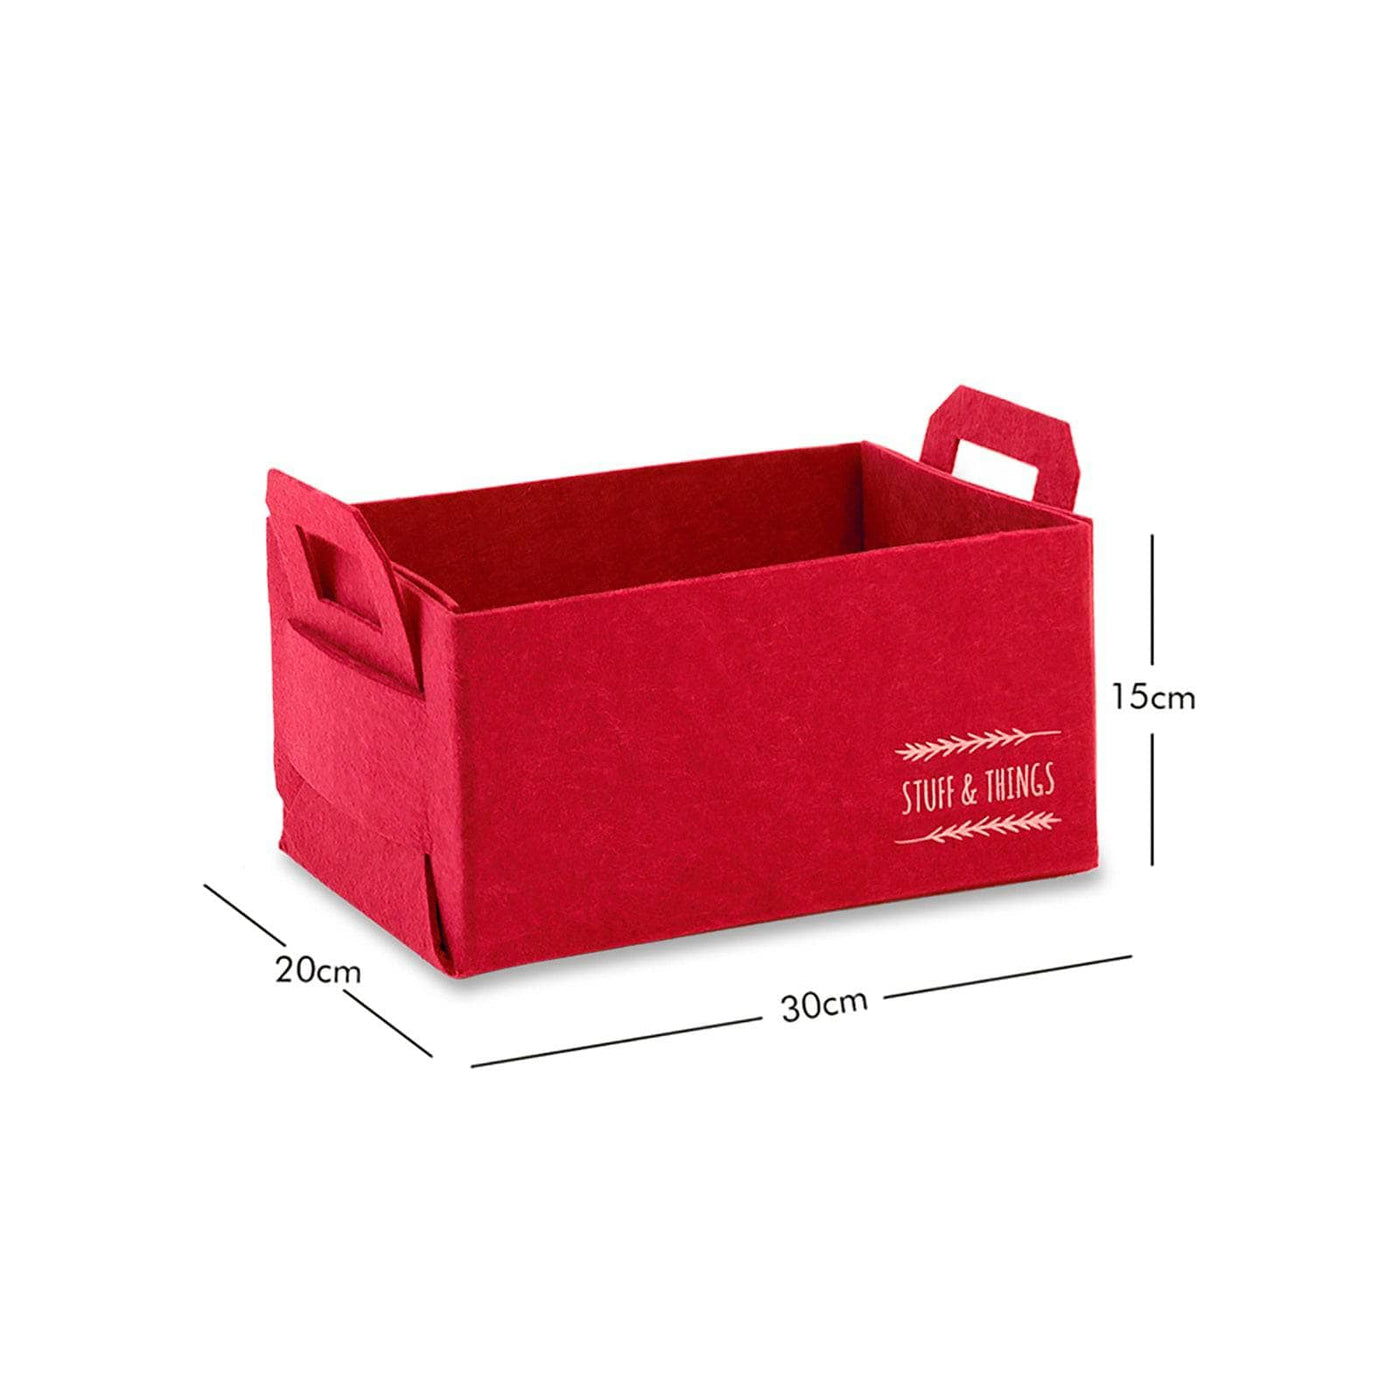 Stuff - Things Storage Box, Red 2